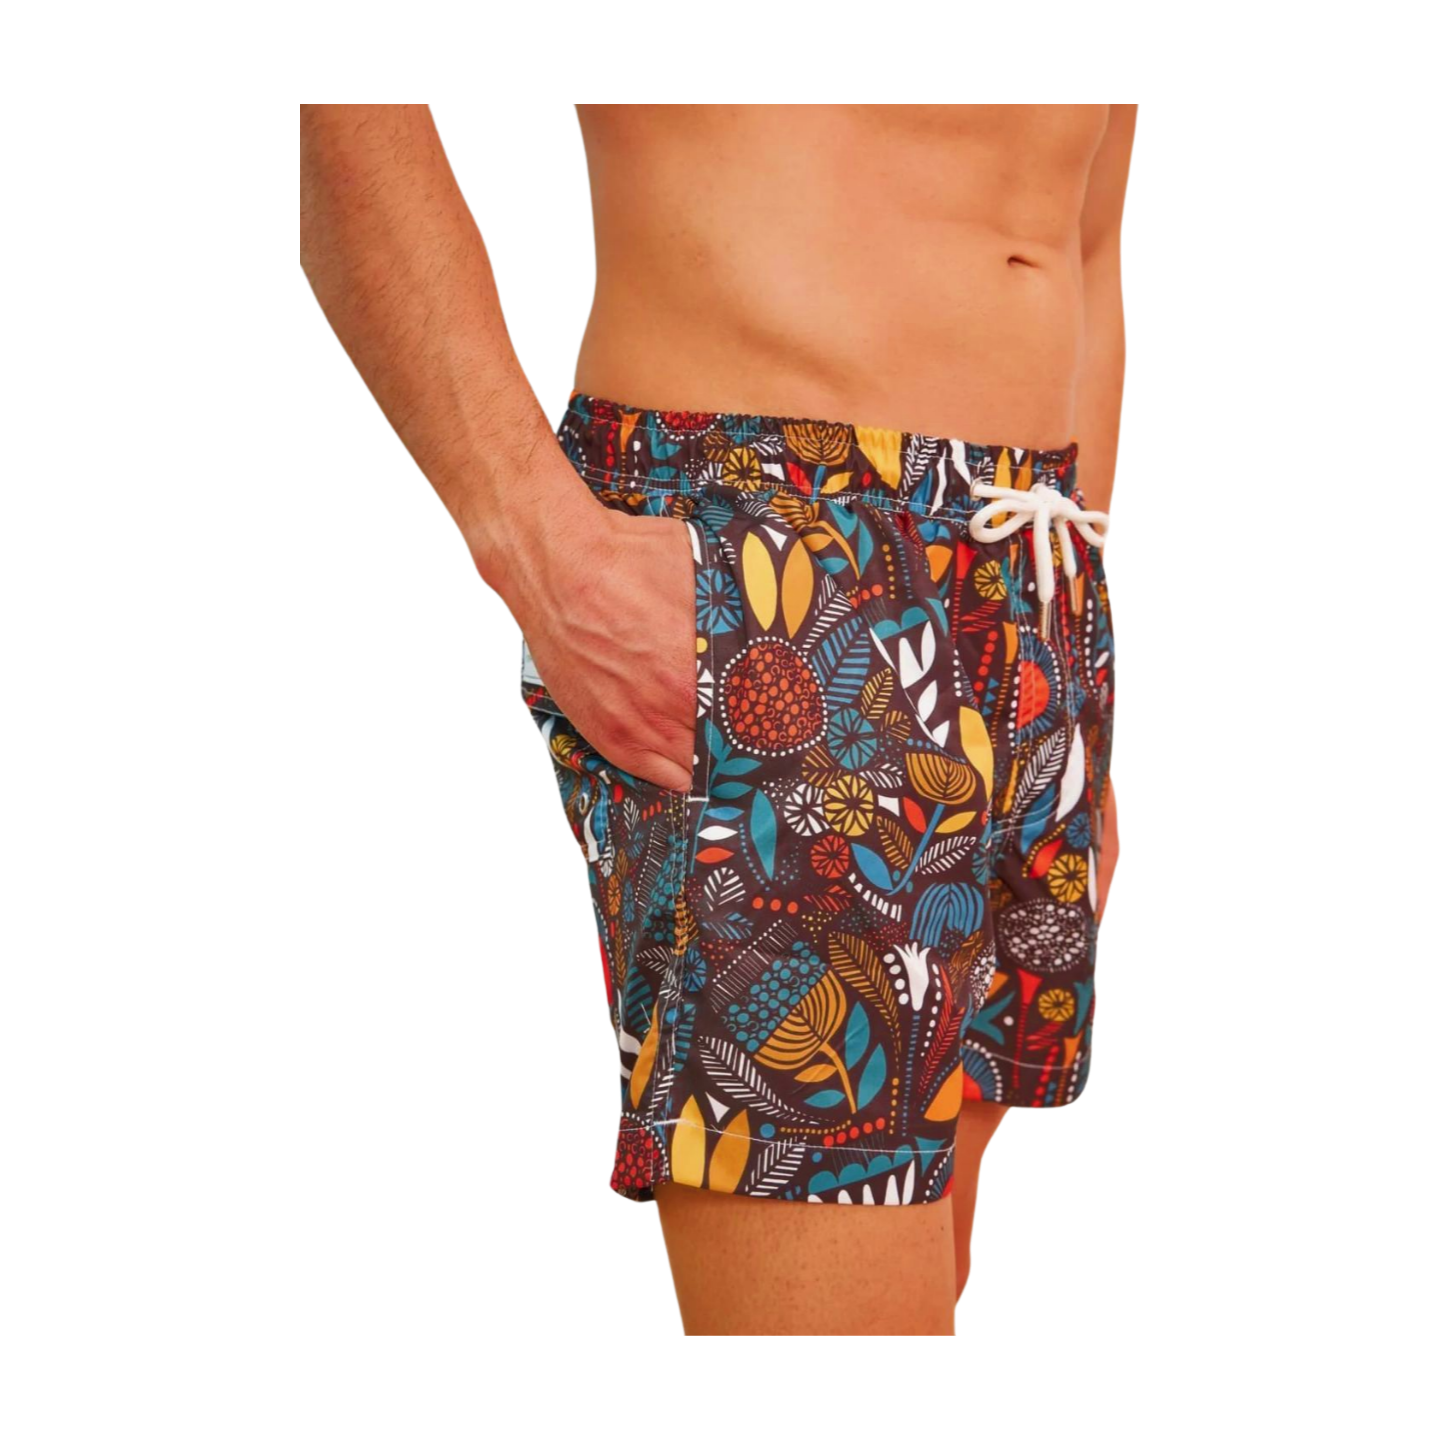 Men's Vibrant Colors Swim Trunks - Bold and Bright Beachwear for a Stylish Splash